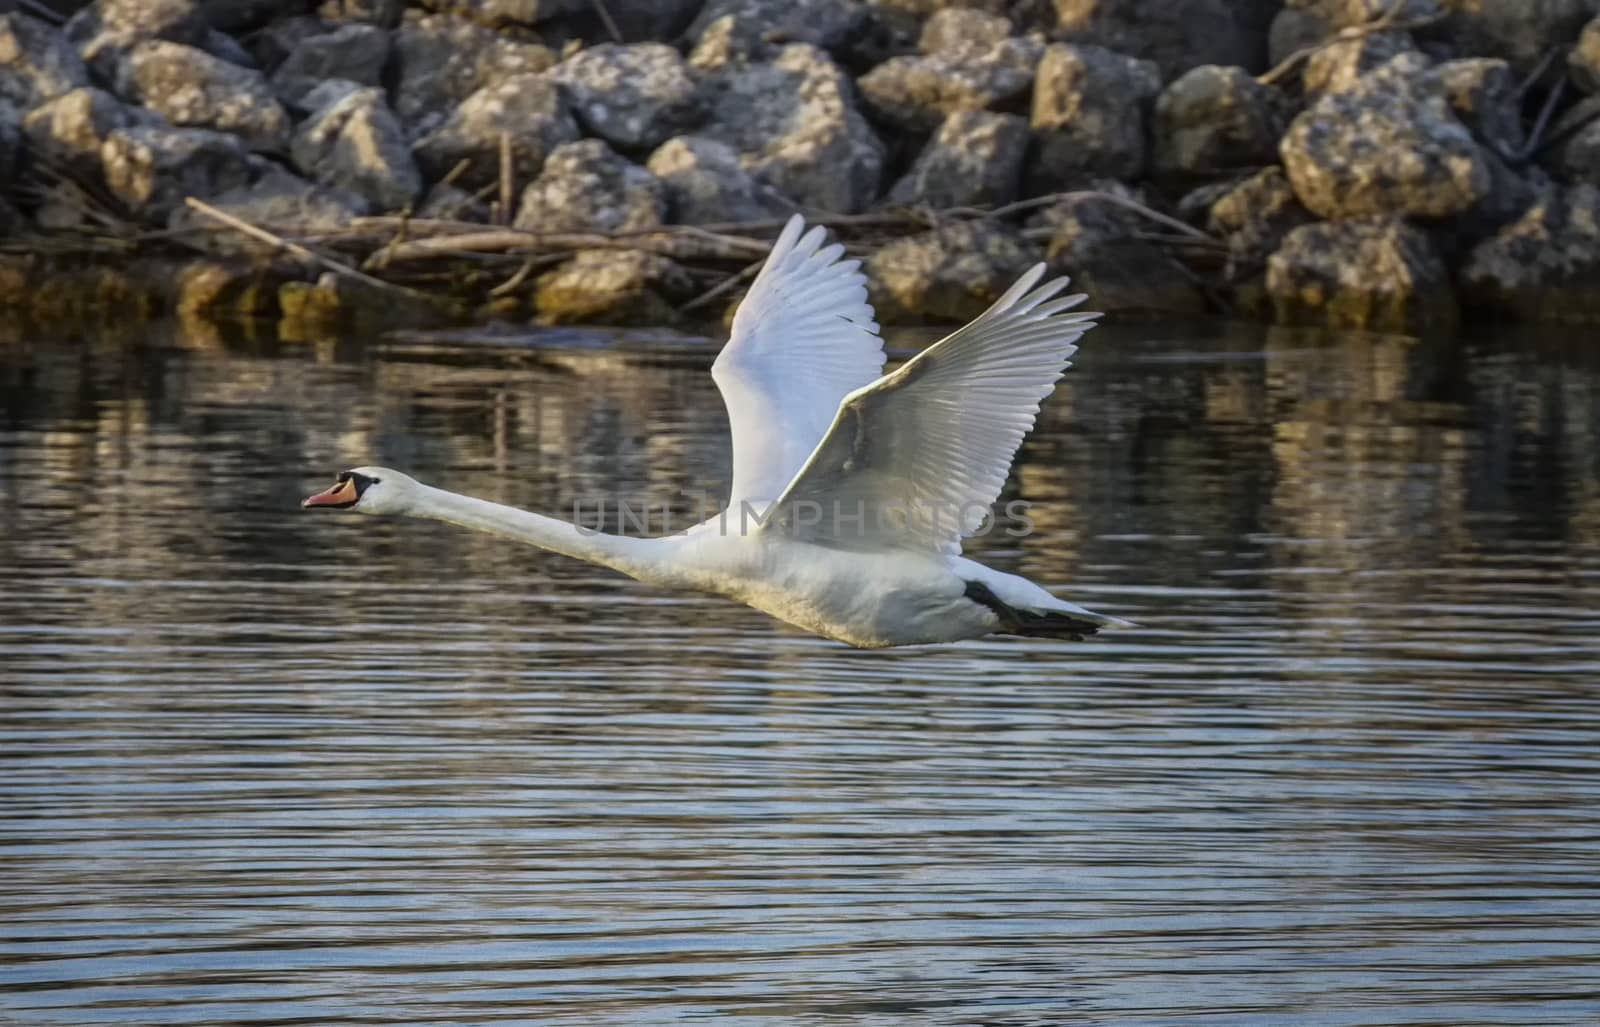 Mute swan, cygnus olor, flying on water